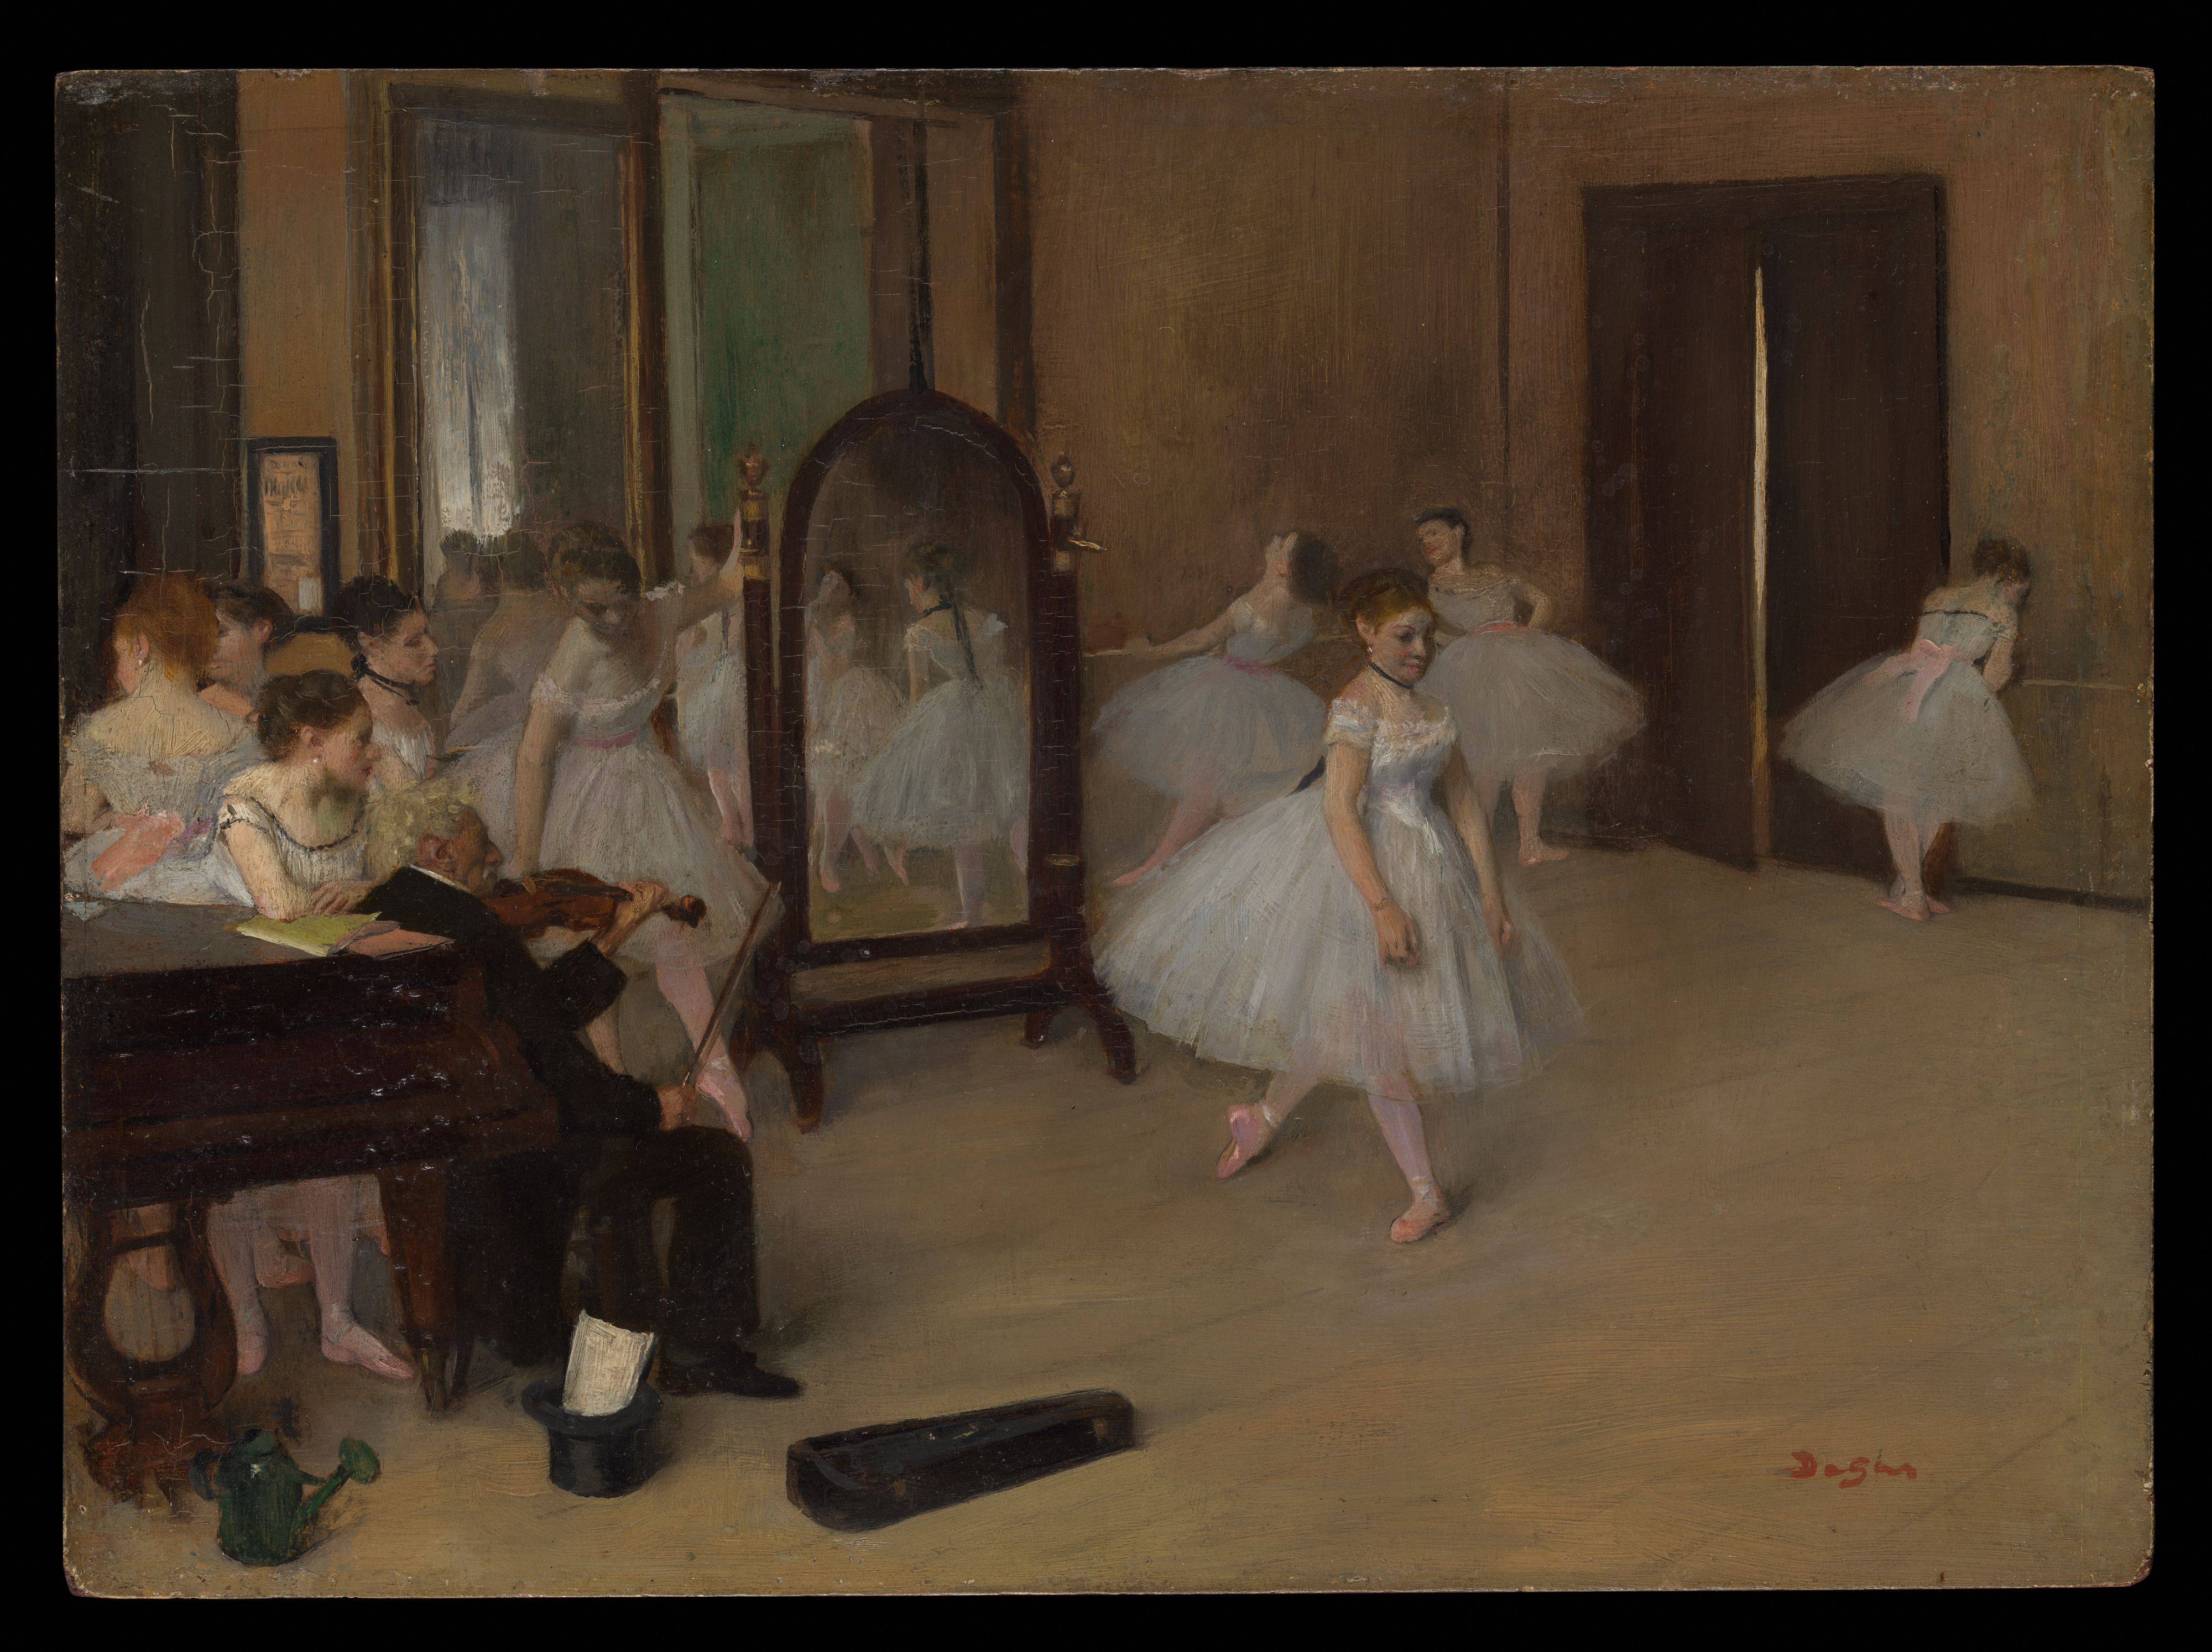 Edgar Degas, The Dancing Class, c. 1870, The Metropolitan Museum of Art, New York, NY, USA.